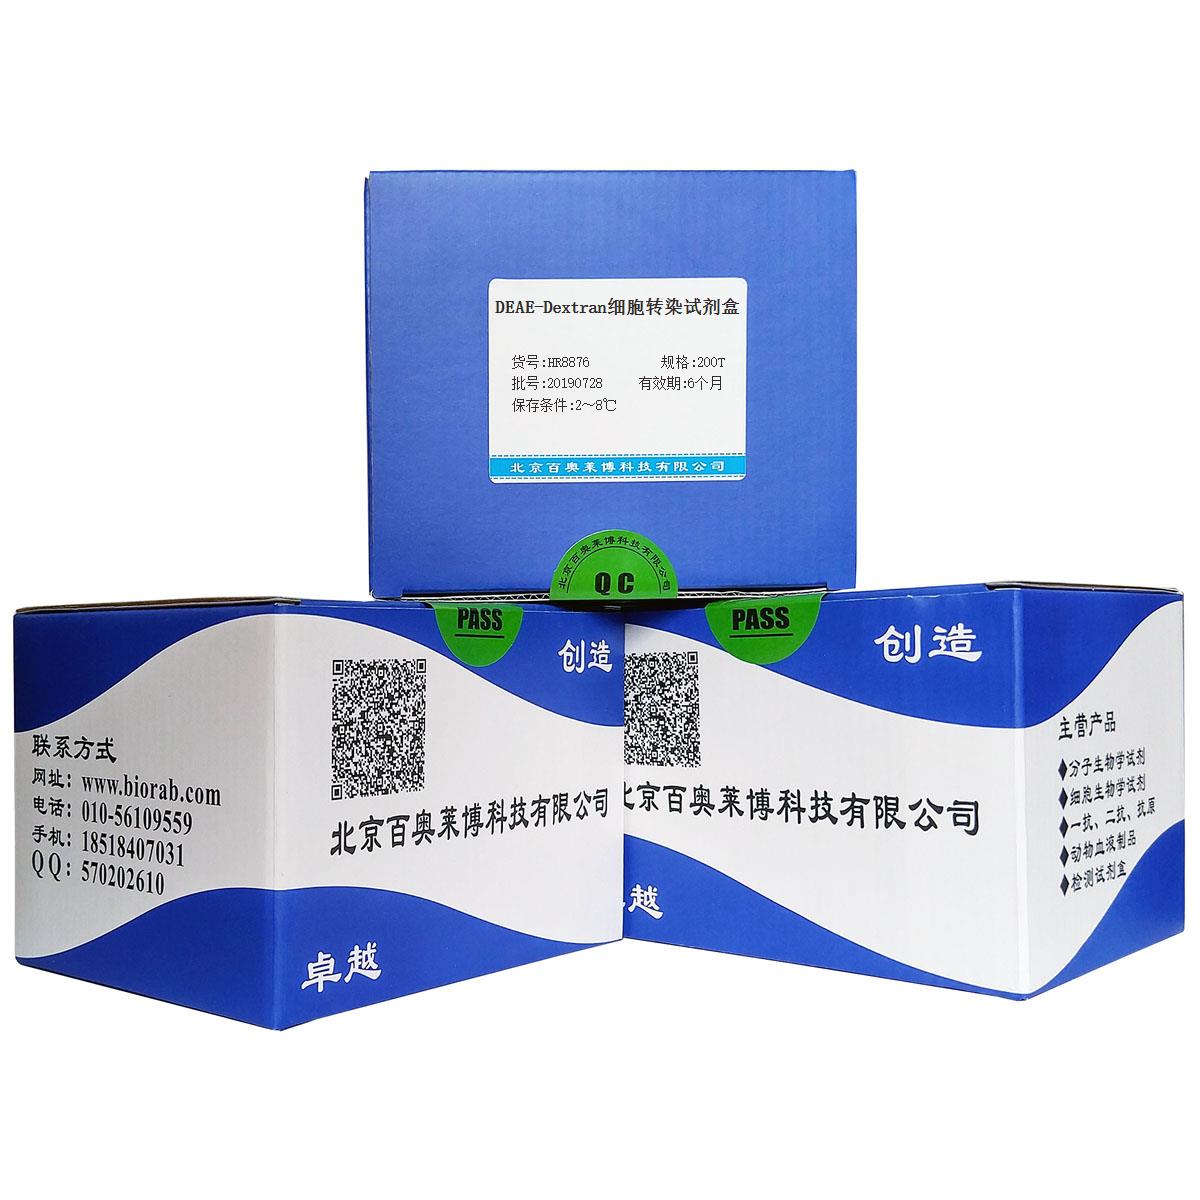 DEAE-Dextran细胞转染试剂盒北京品牌